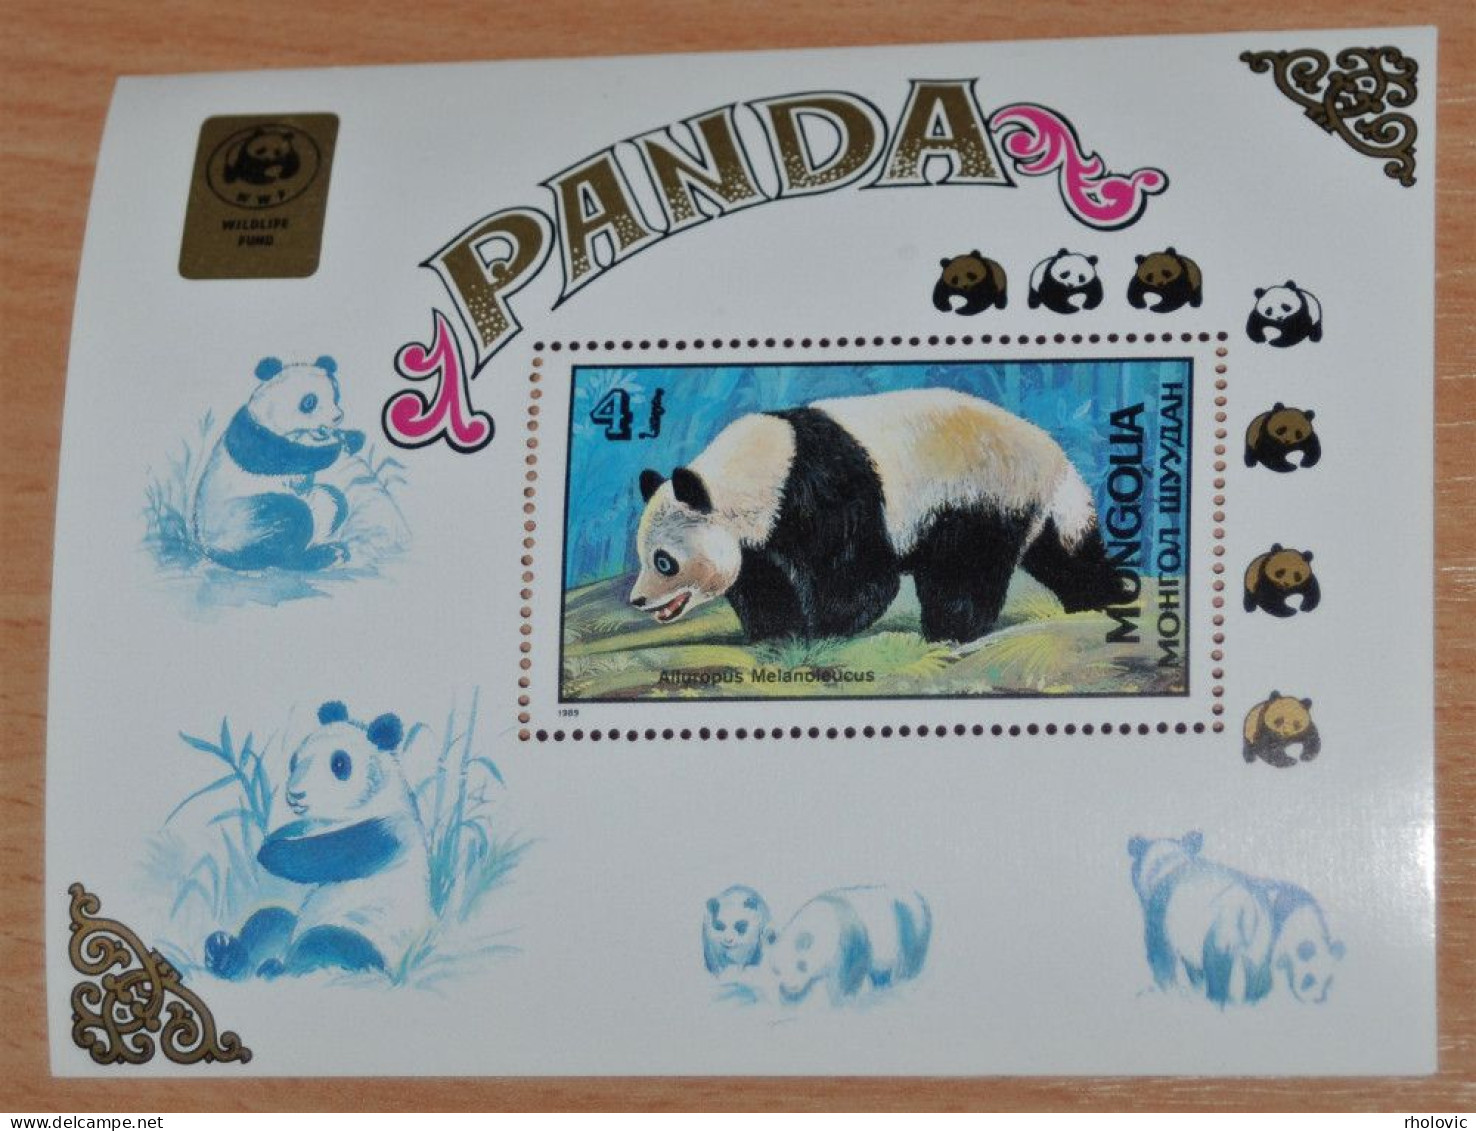 MONGOLIA 1989, Panda, Bears, Animals, Fauna, Mi #B134, Souvenir Sheet, MNH** - Bears